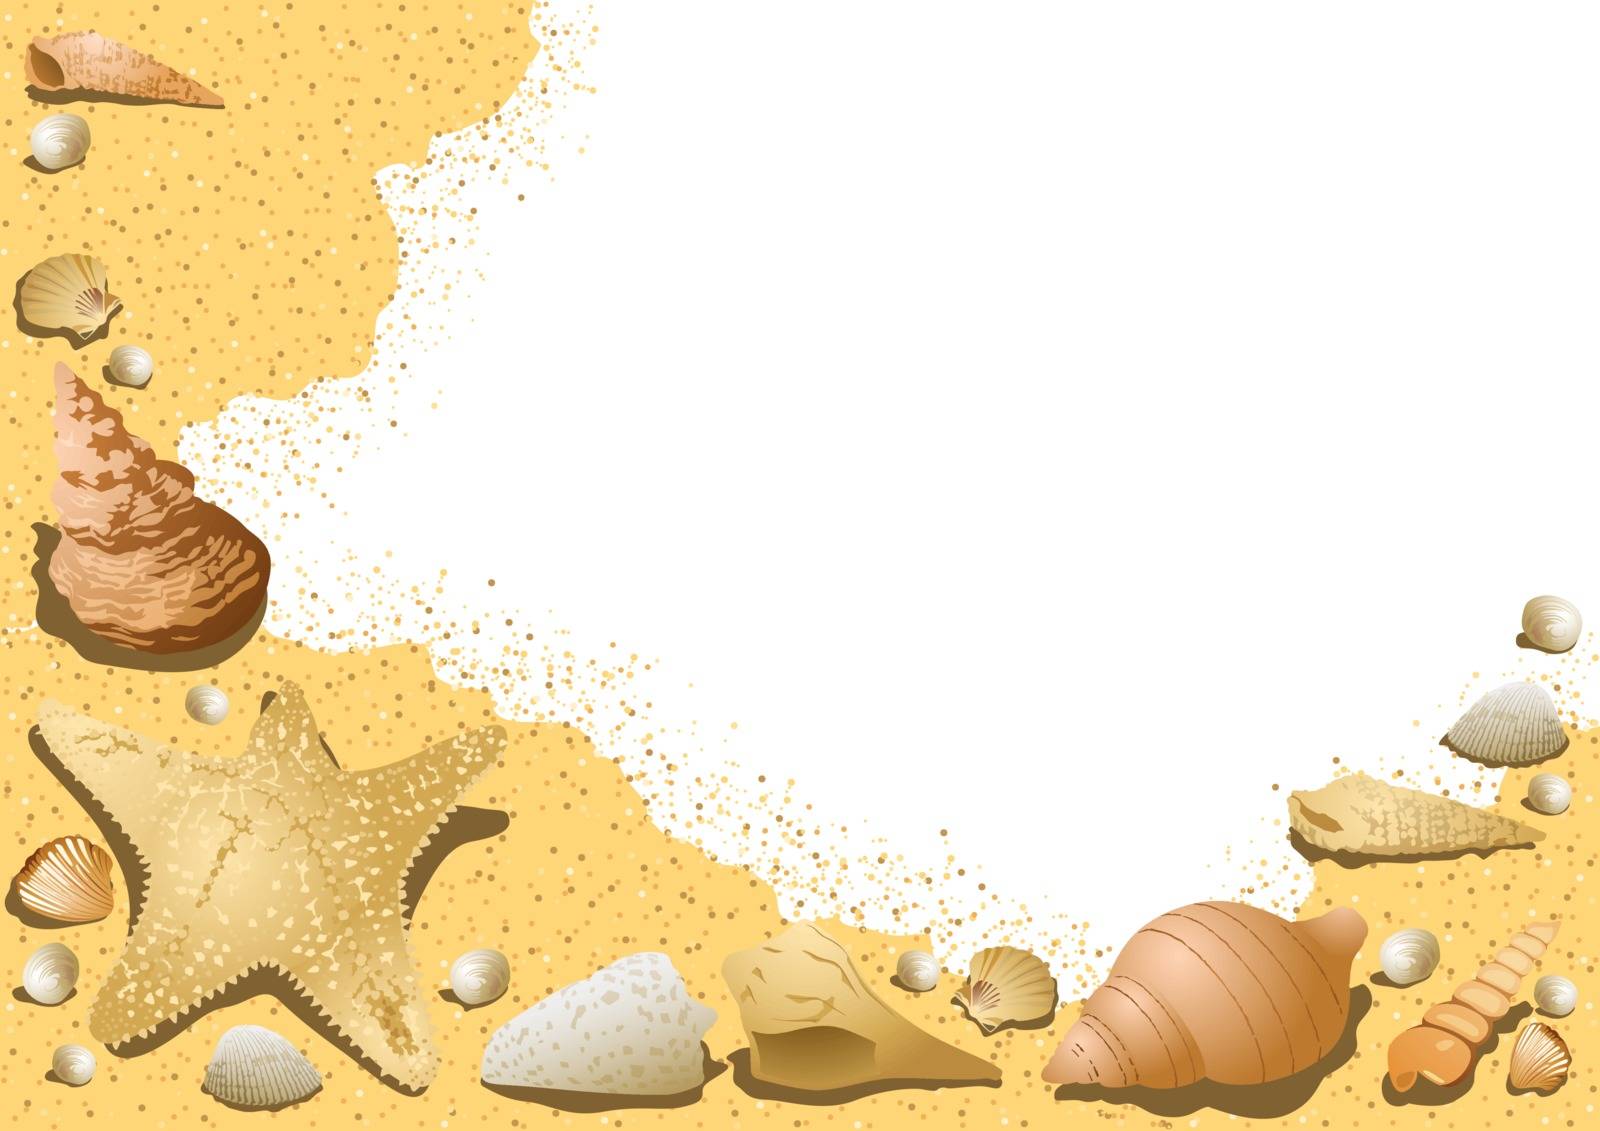 Sandy Background with Seashells by illustratorCZ